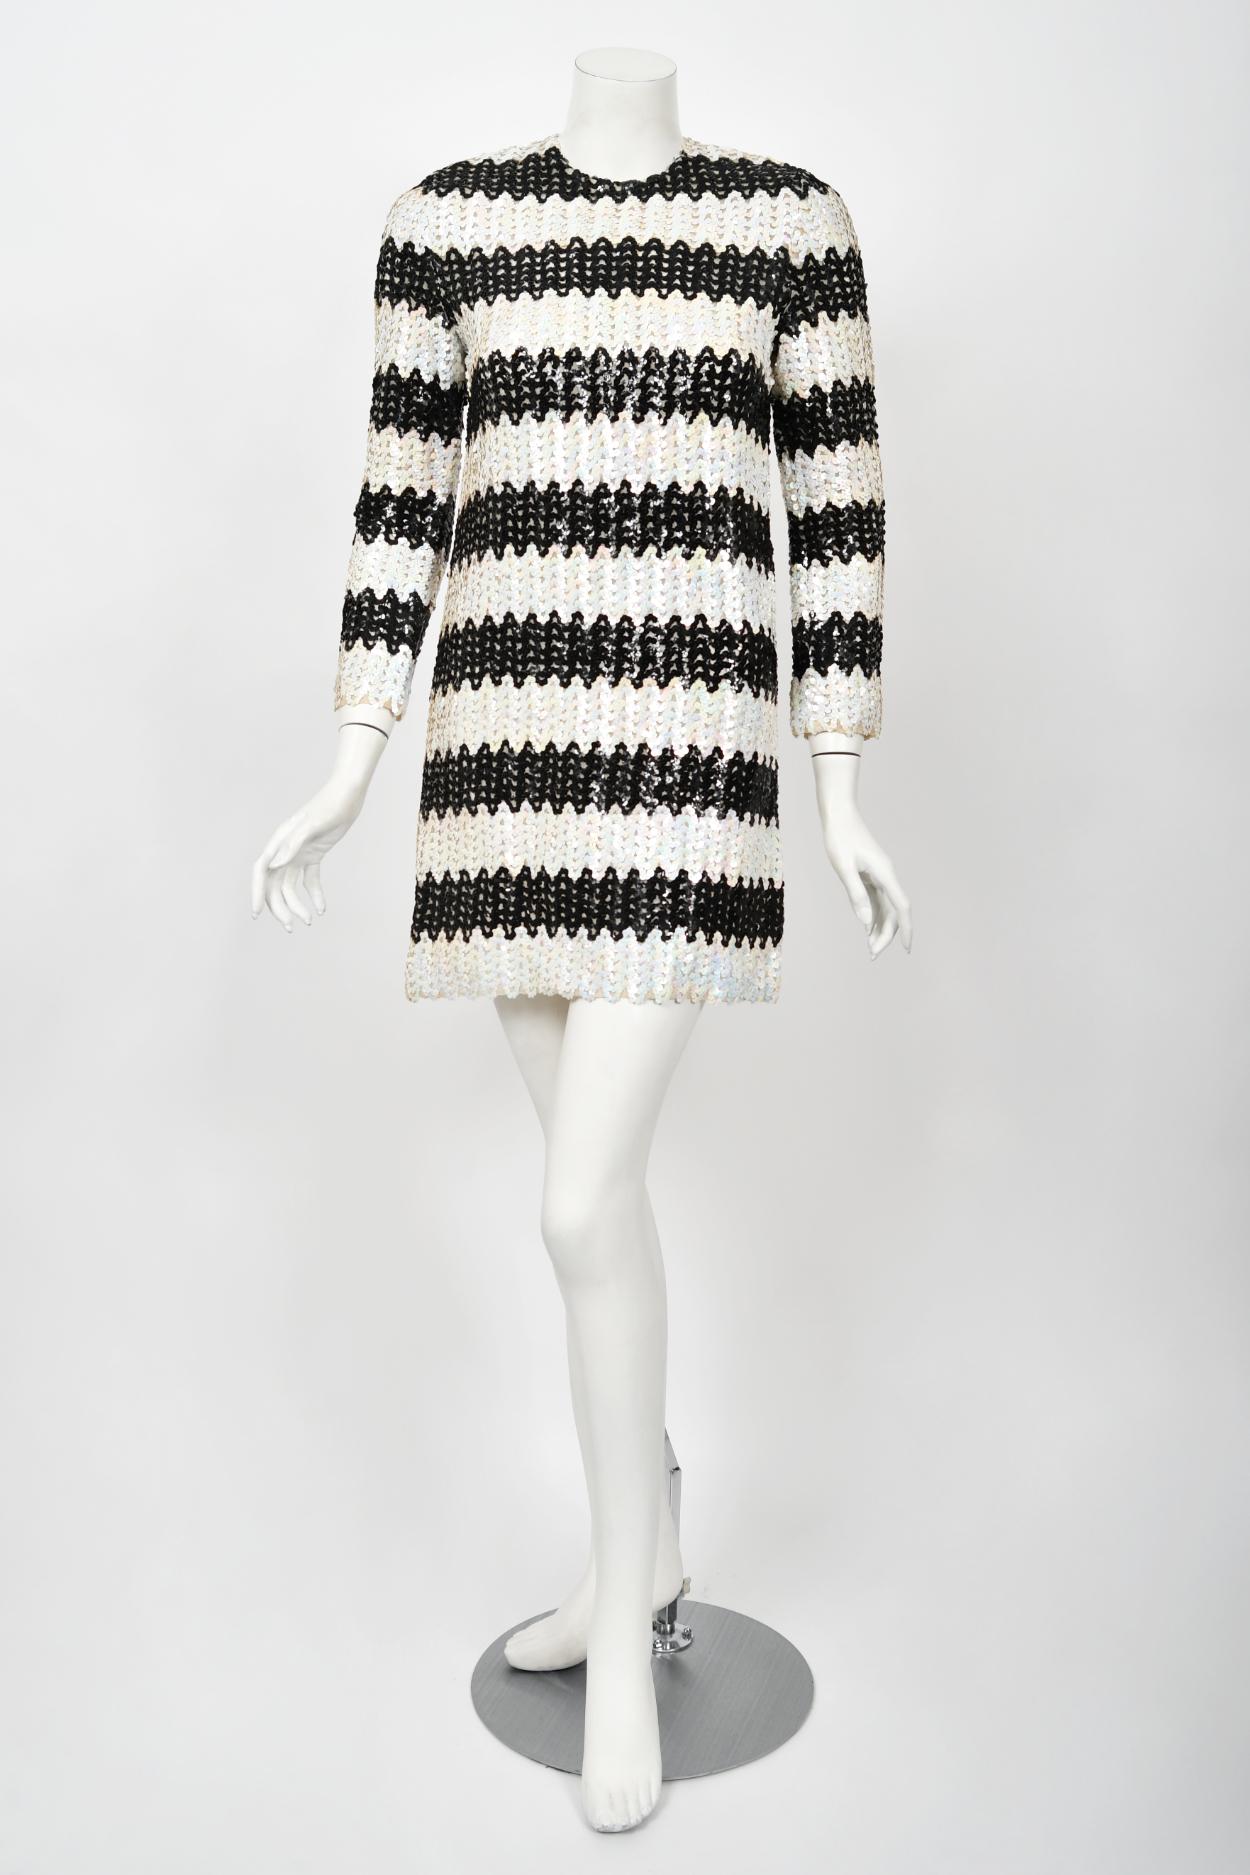 Vintage 1966 Betsey Johnson for Paraphernalia Documented Sequin Mod Mini Dress 10